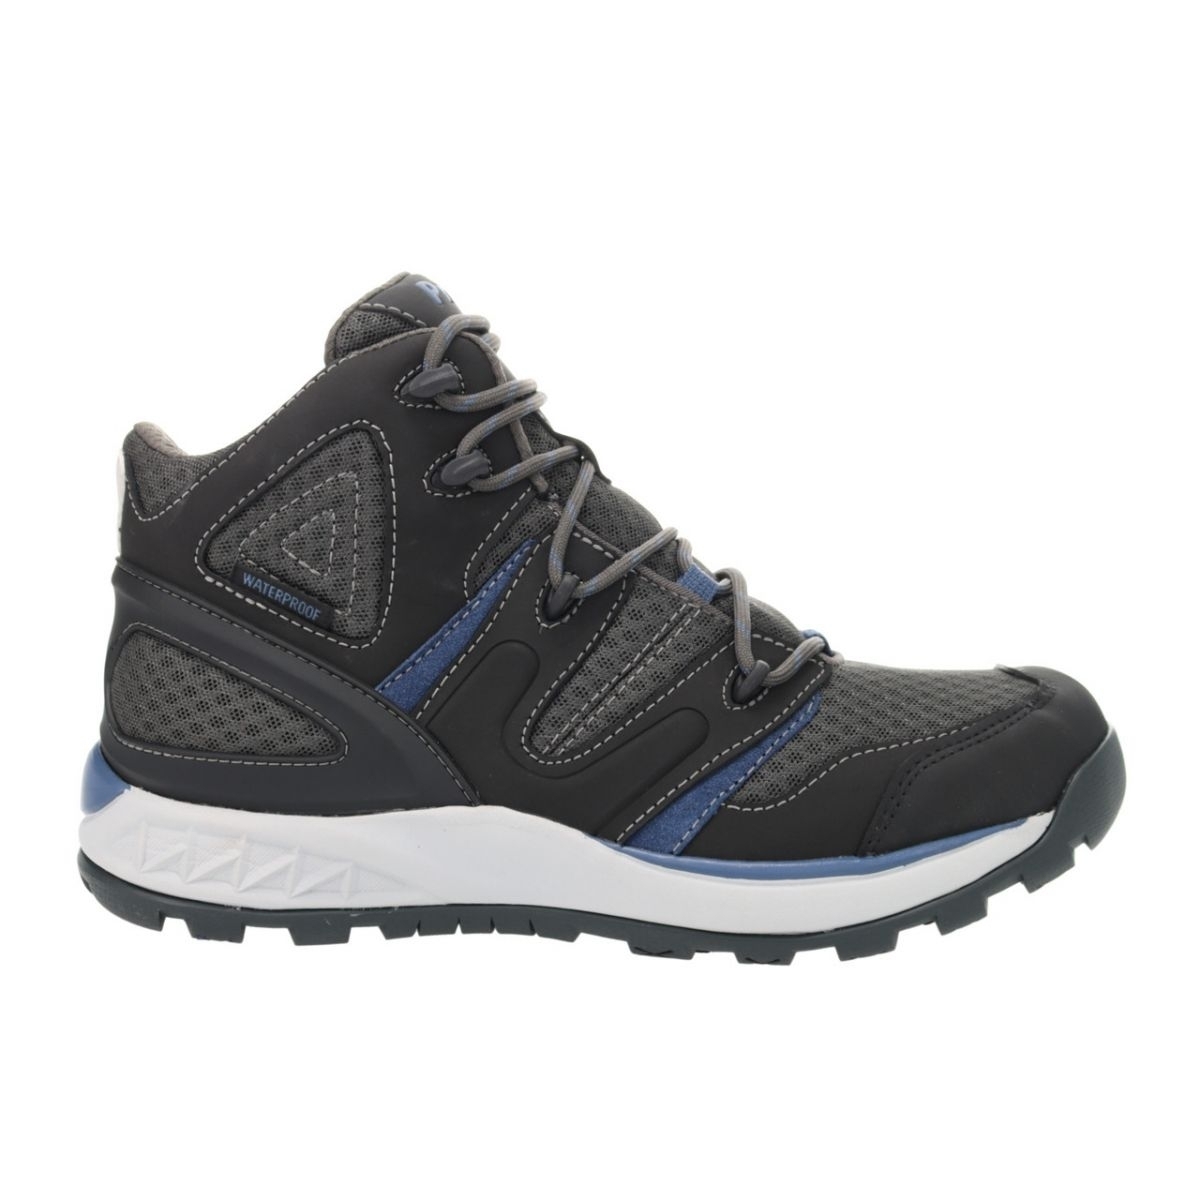 Propet Men's Veymont Waterproof Hiking Boot Grey/Blue - MOA022SGRB GREY/BLUE - GREY/BLUE, 13